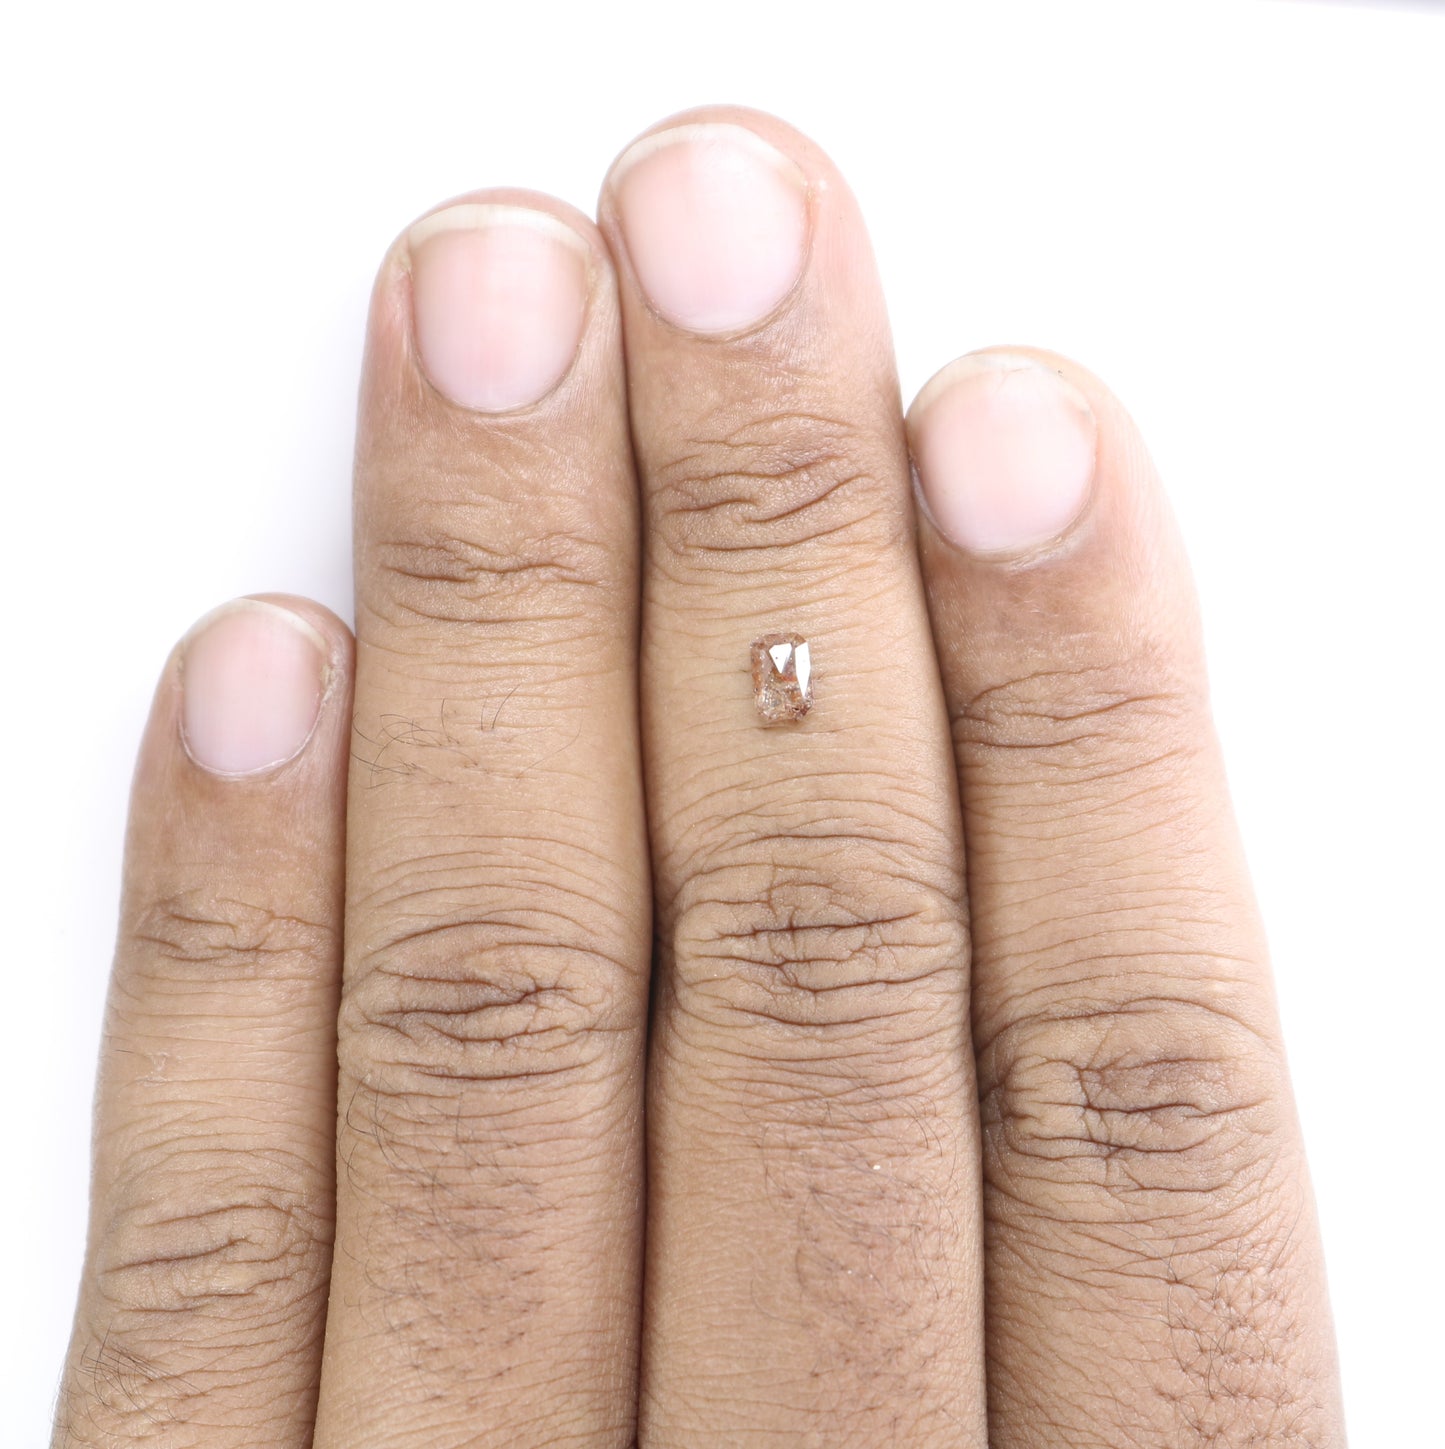 0.44 CT Red Emerald Natural Loose Diamond For Anniversary Ring | Valentine Emerald Diamond Ring For Girlfriend | Galaxy Emerald Diamond